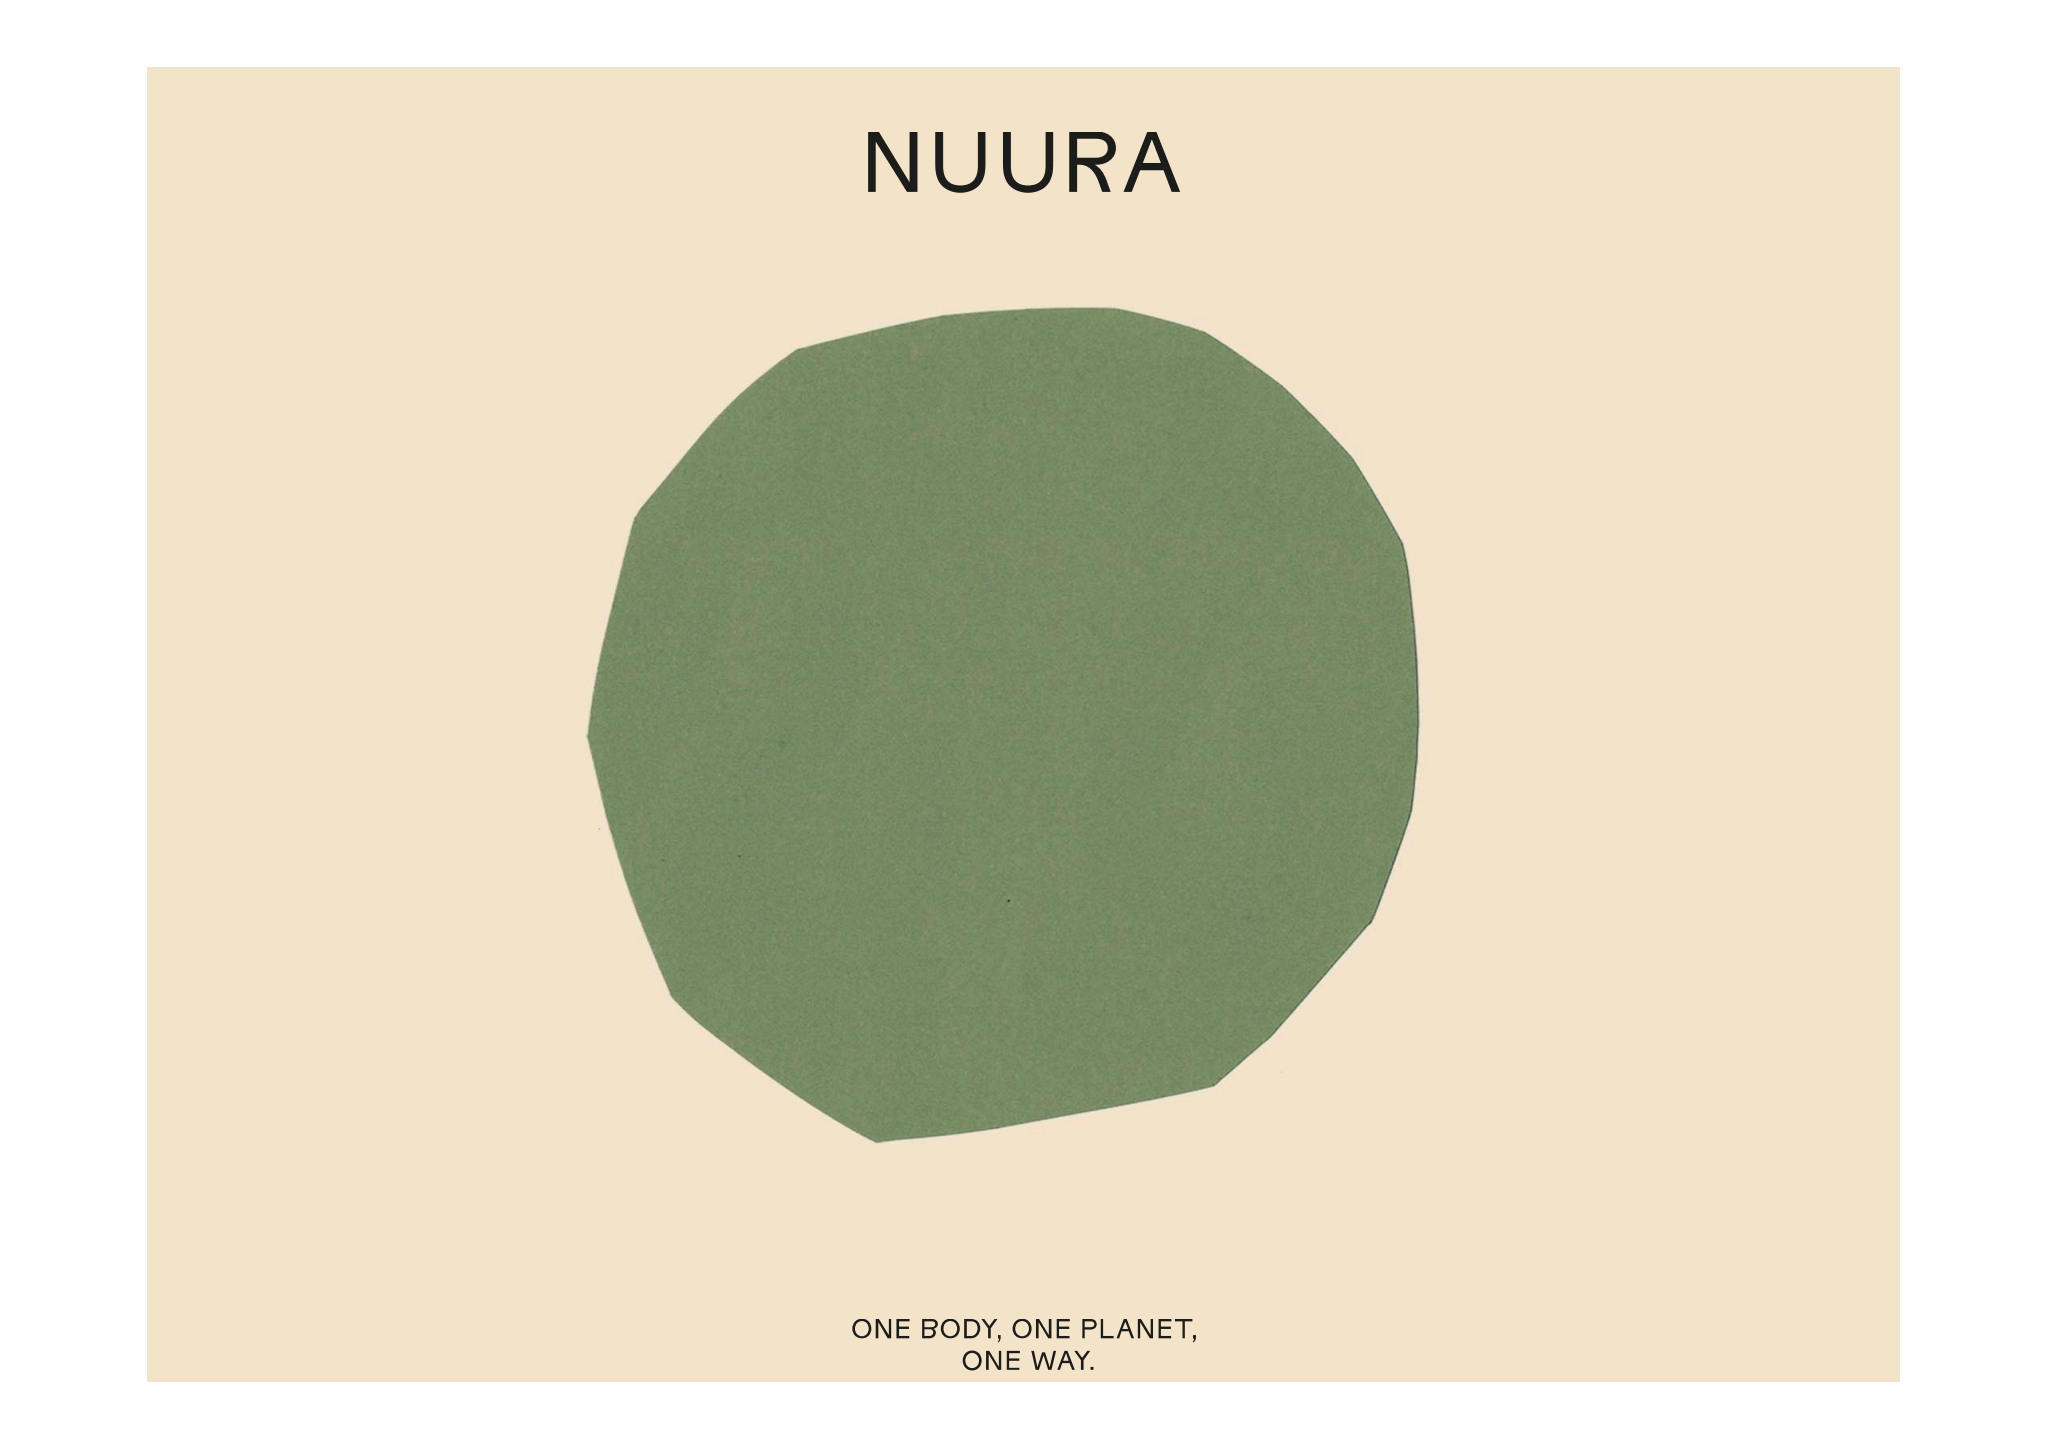 Nuura